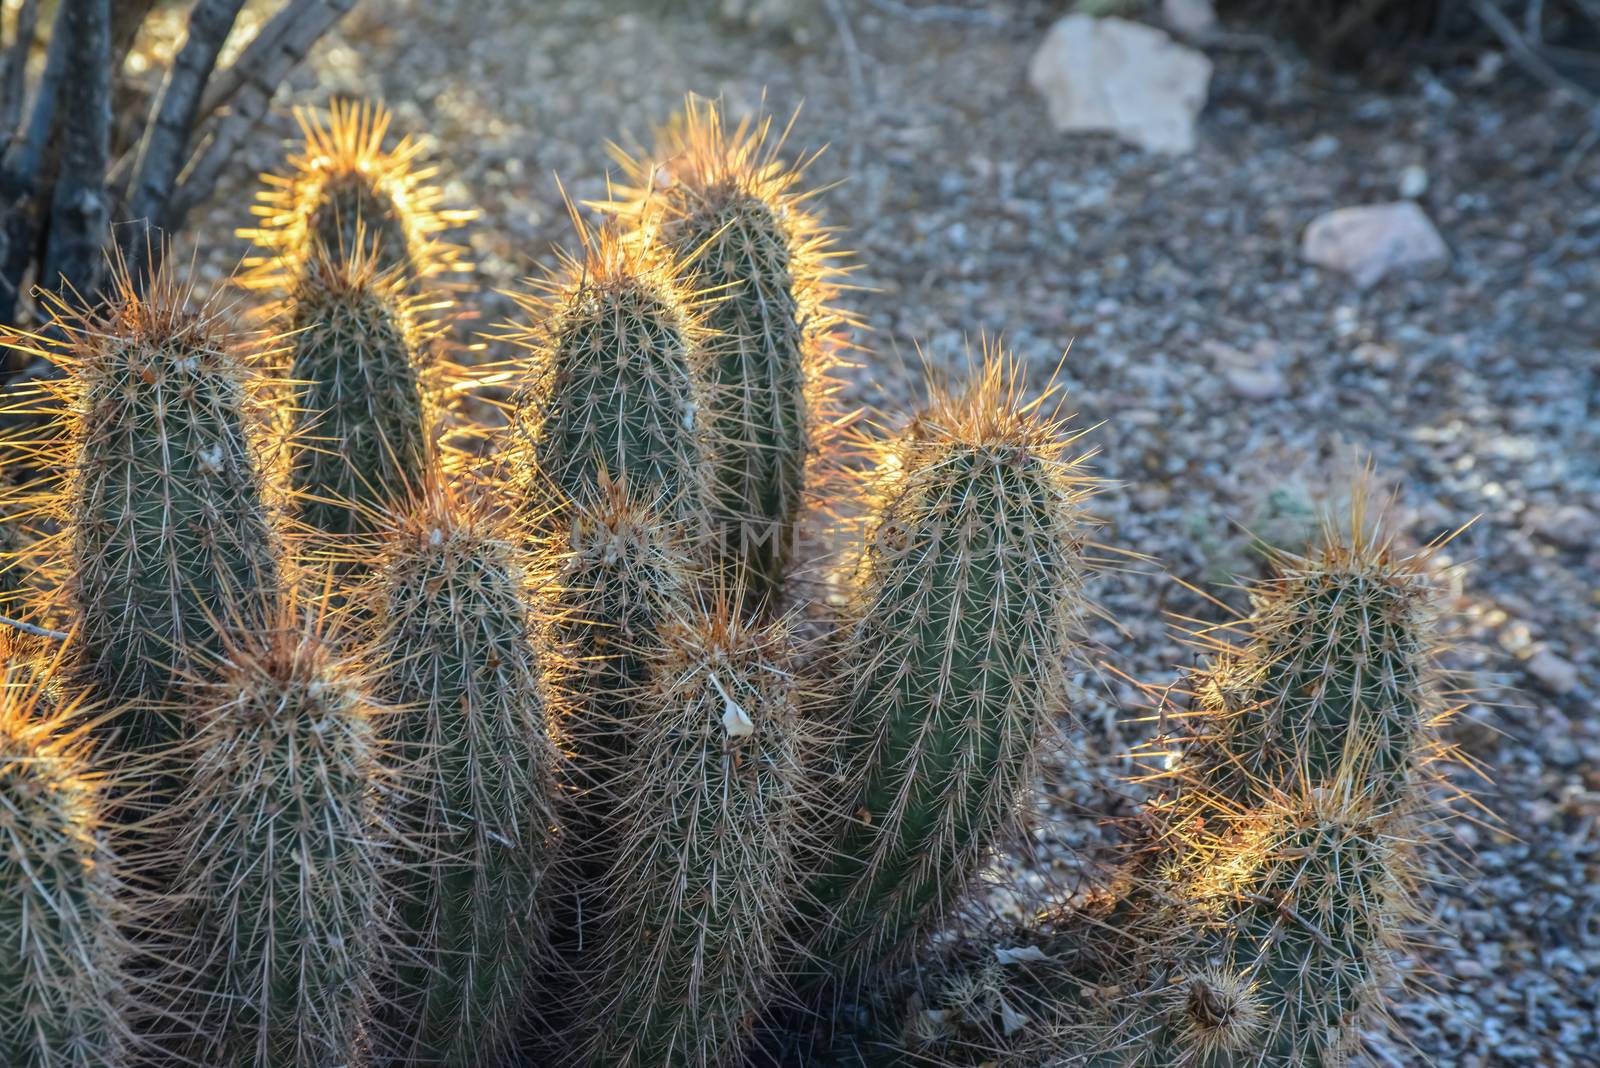 Large multi-stem cactus Echinocereus sp., Arizona, USA by Hydrobiolog